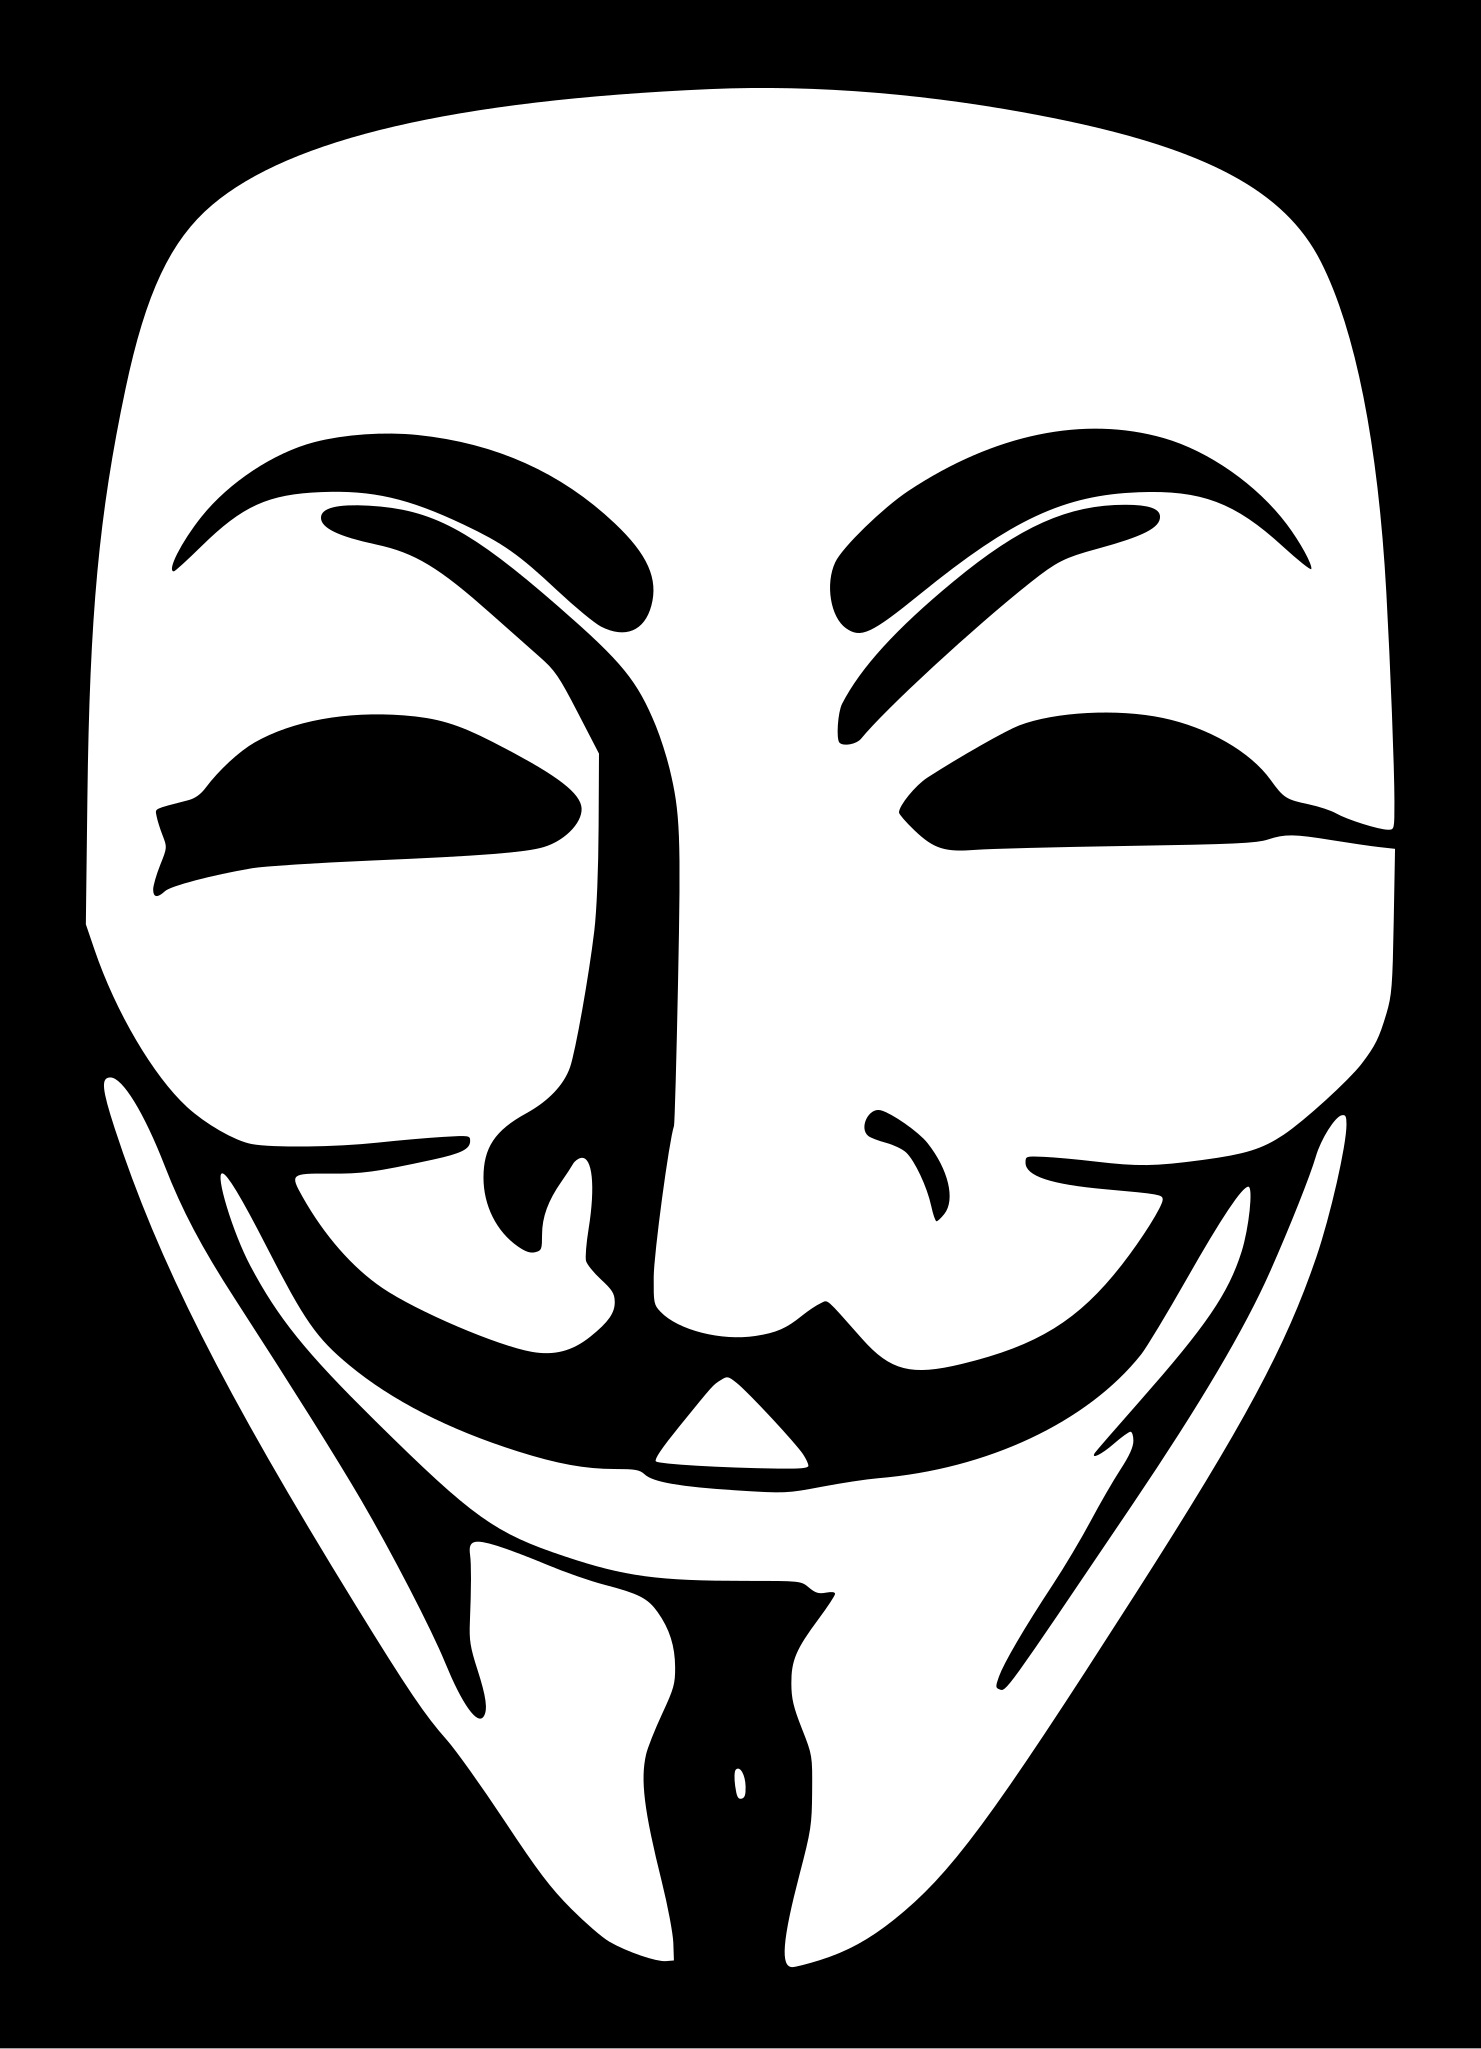 Guy Fawkes mask - Wikipedia